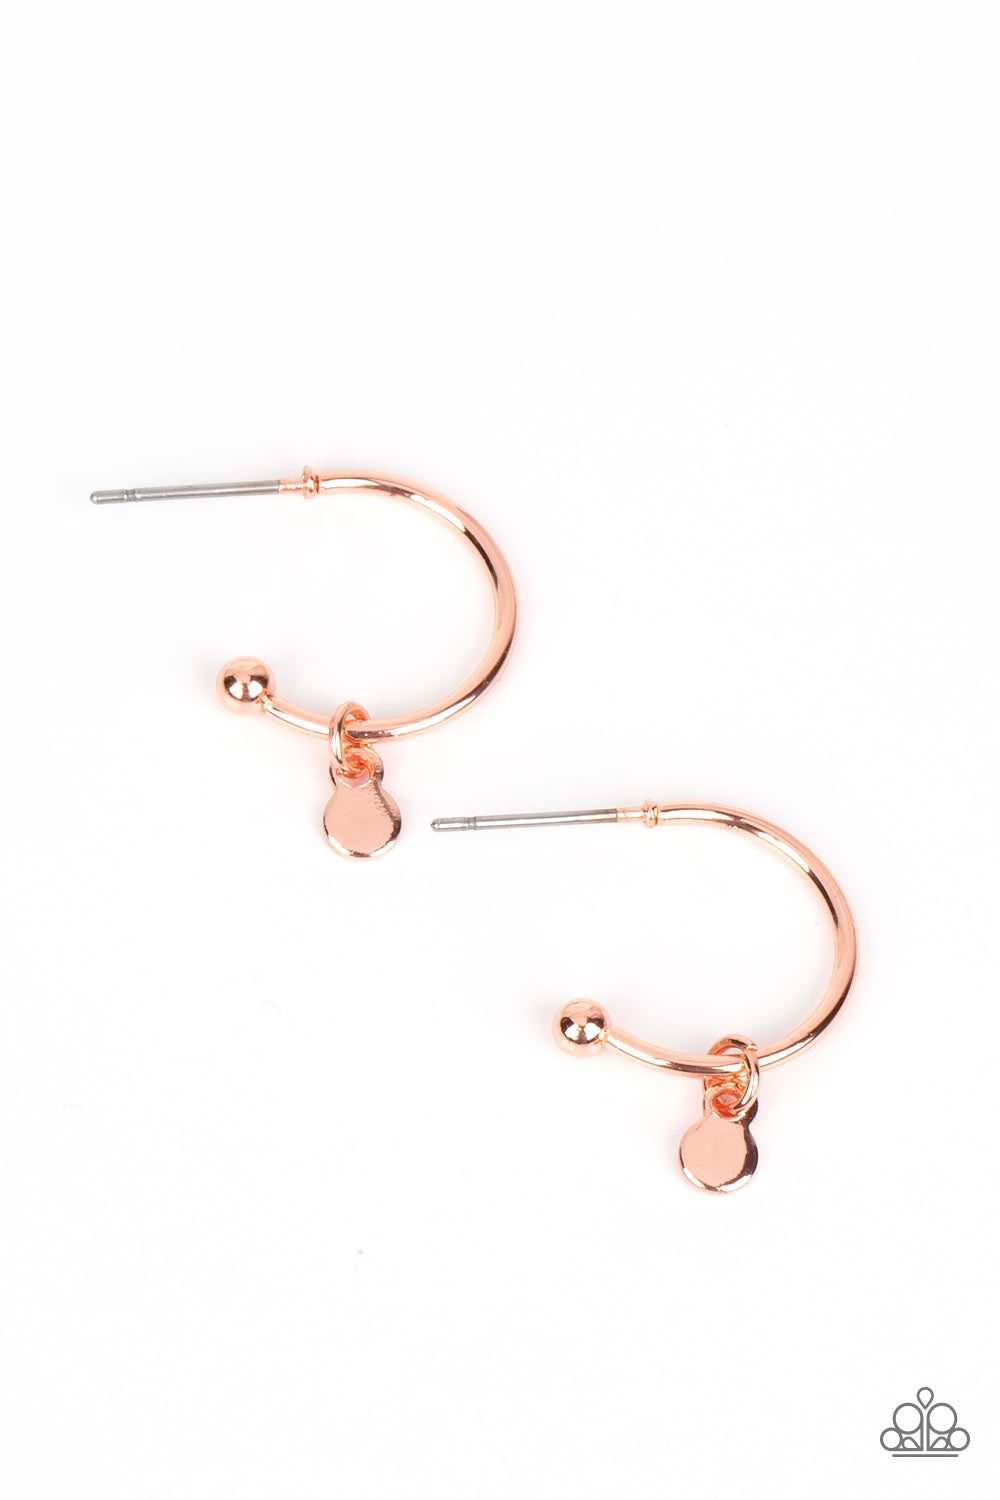 Paparazzi Modern Model - Copper Earrings -Paparazzi Jewelry Images 